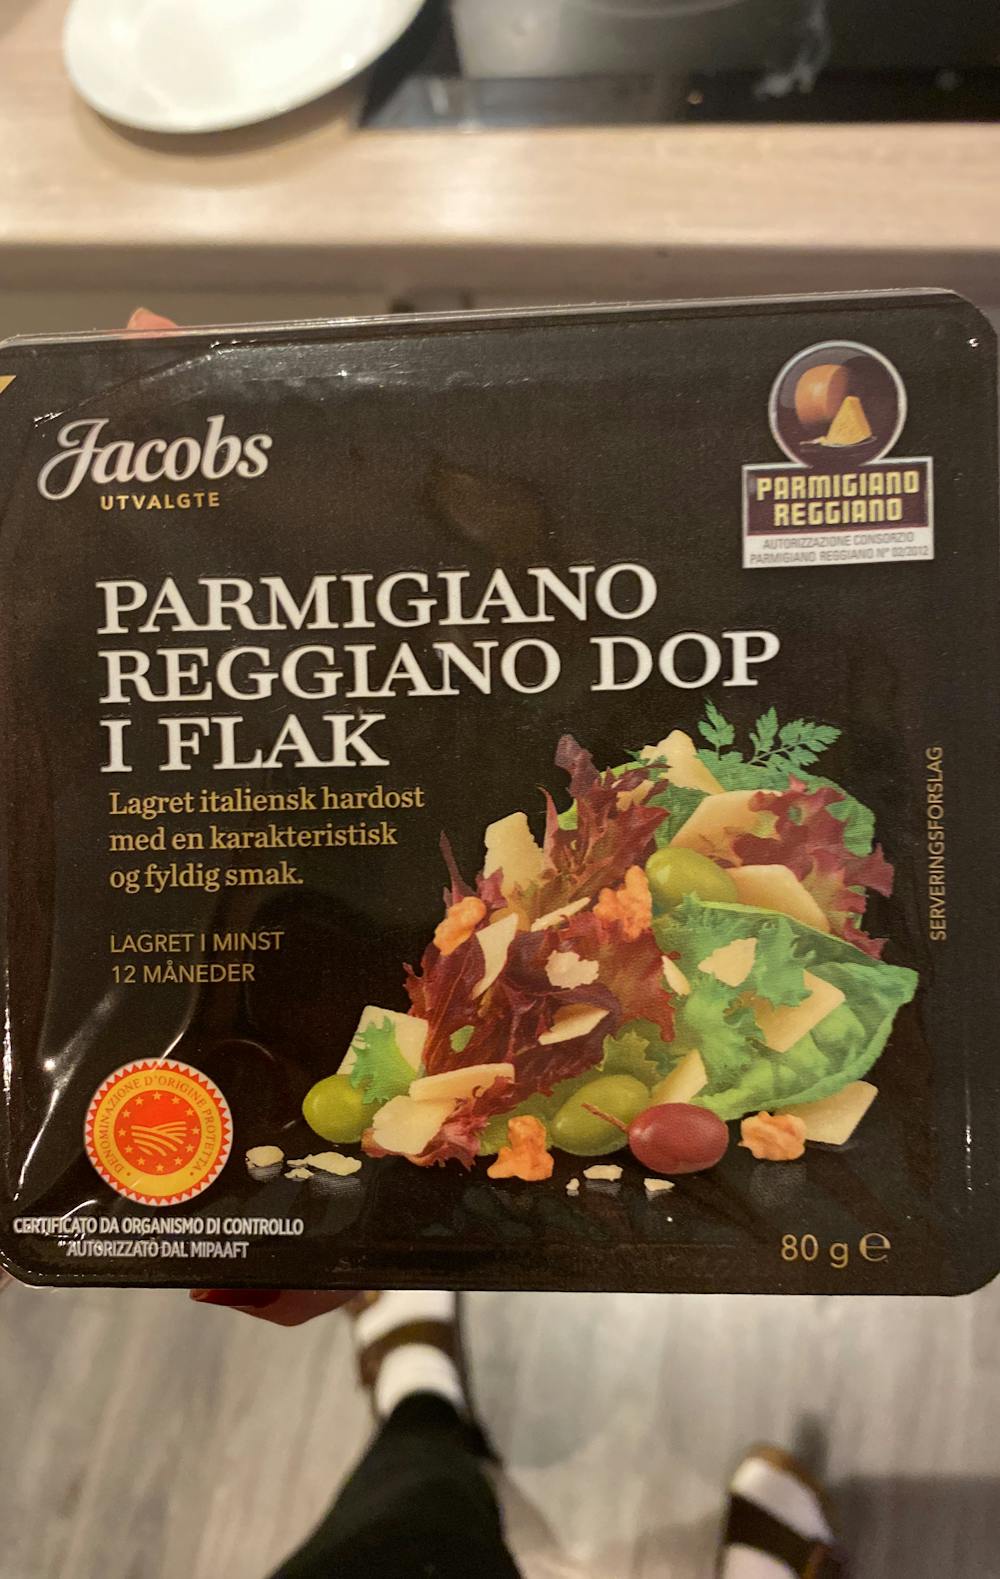 Parmigiano reggiano dop i flak, Jacobs utvalgte